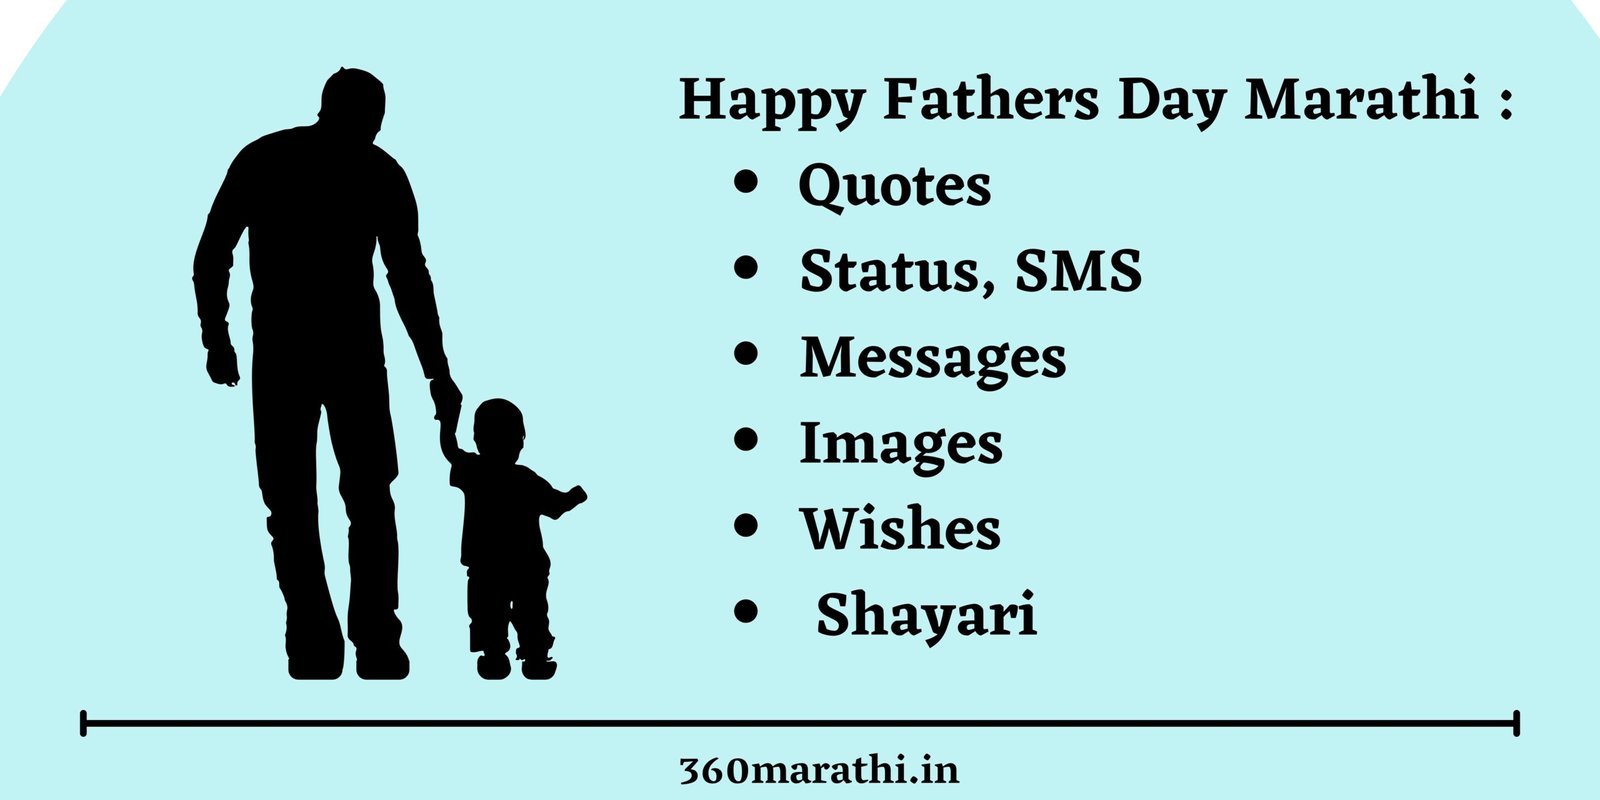 Fathers Day Marathi Quotes, Wishes Images, Messages, Greetings, Whatsapp Status | फादर्स डे साठी कोट्स आणि स्टेटस